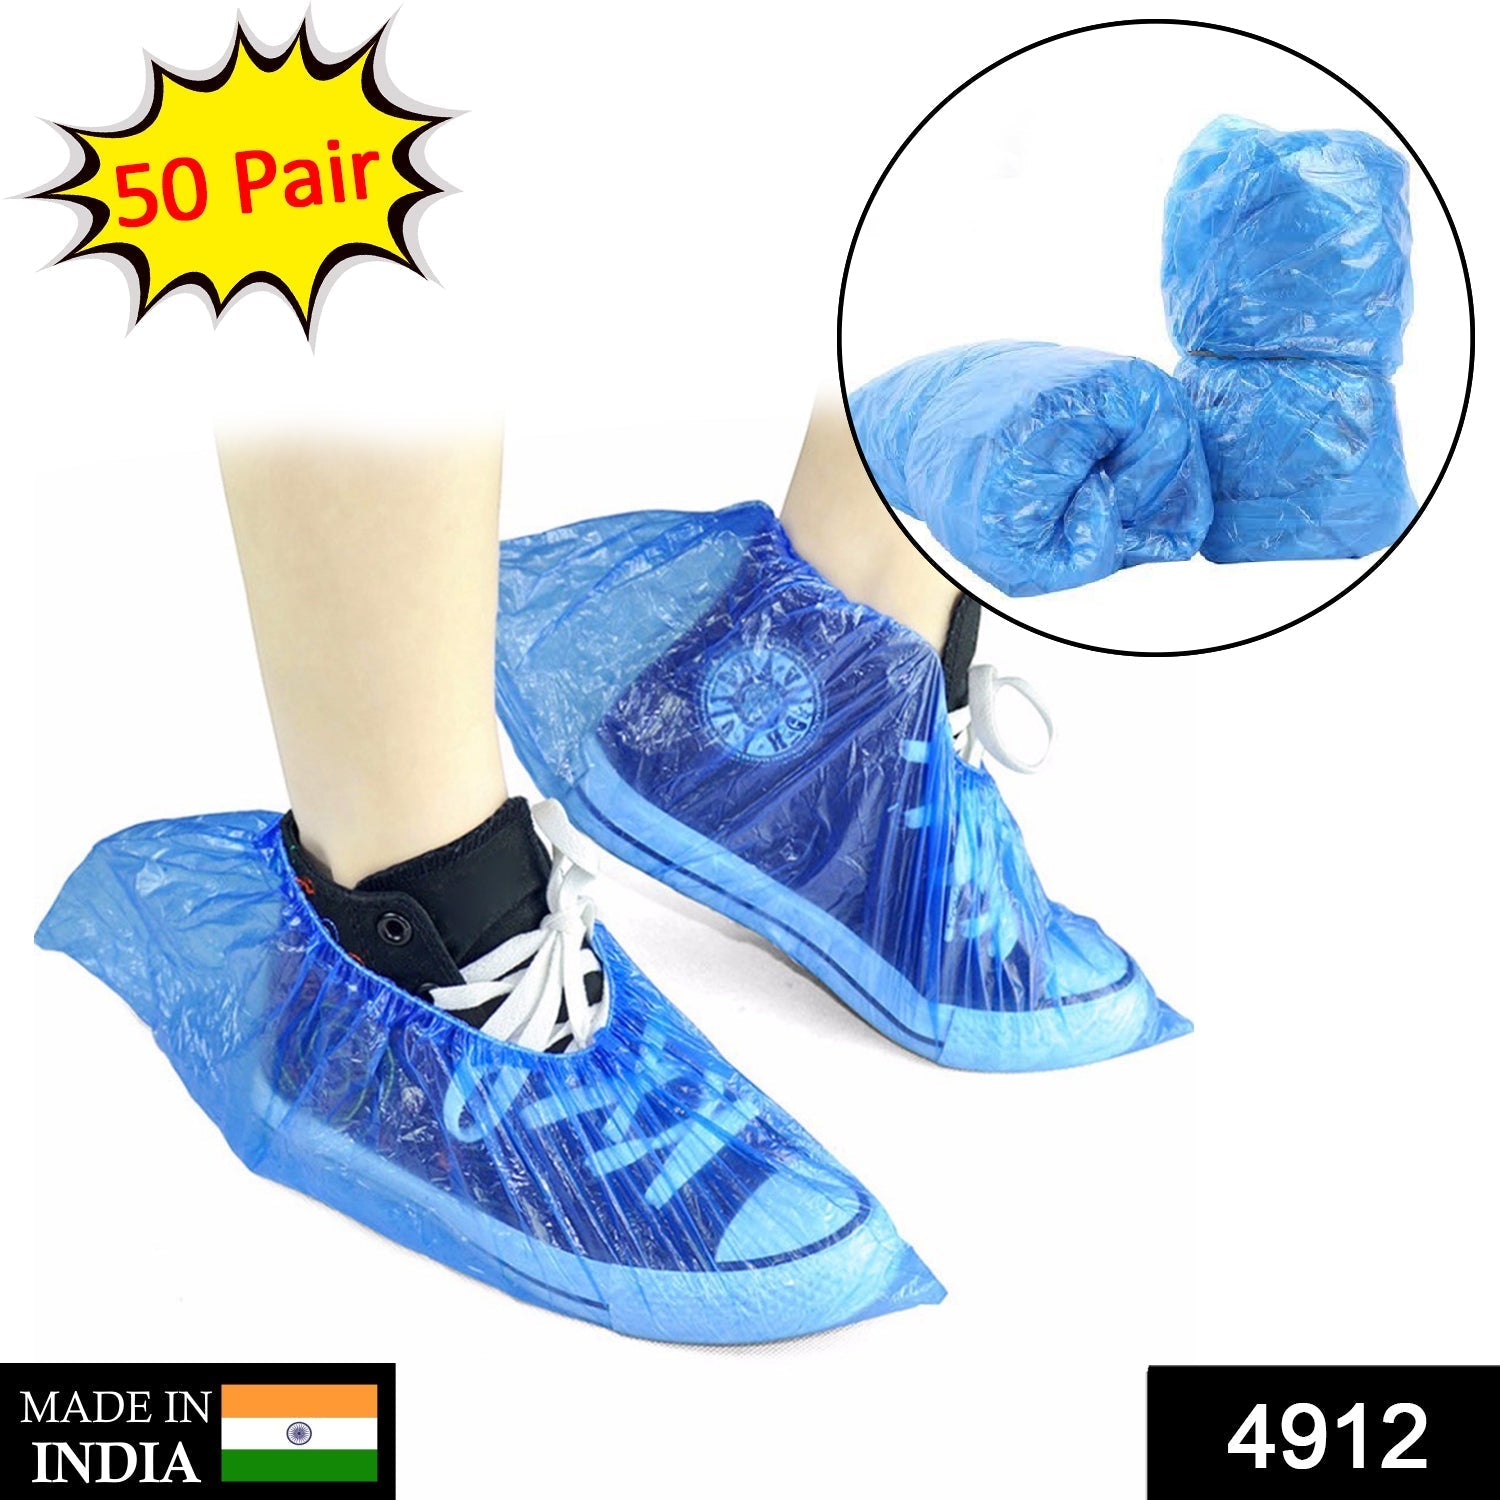 Type Plastic Elastic Top Disposable Shoe Cover for Rainy Season (50 Pairs)